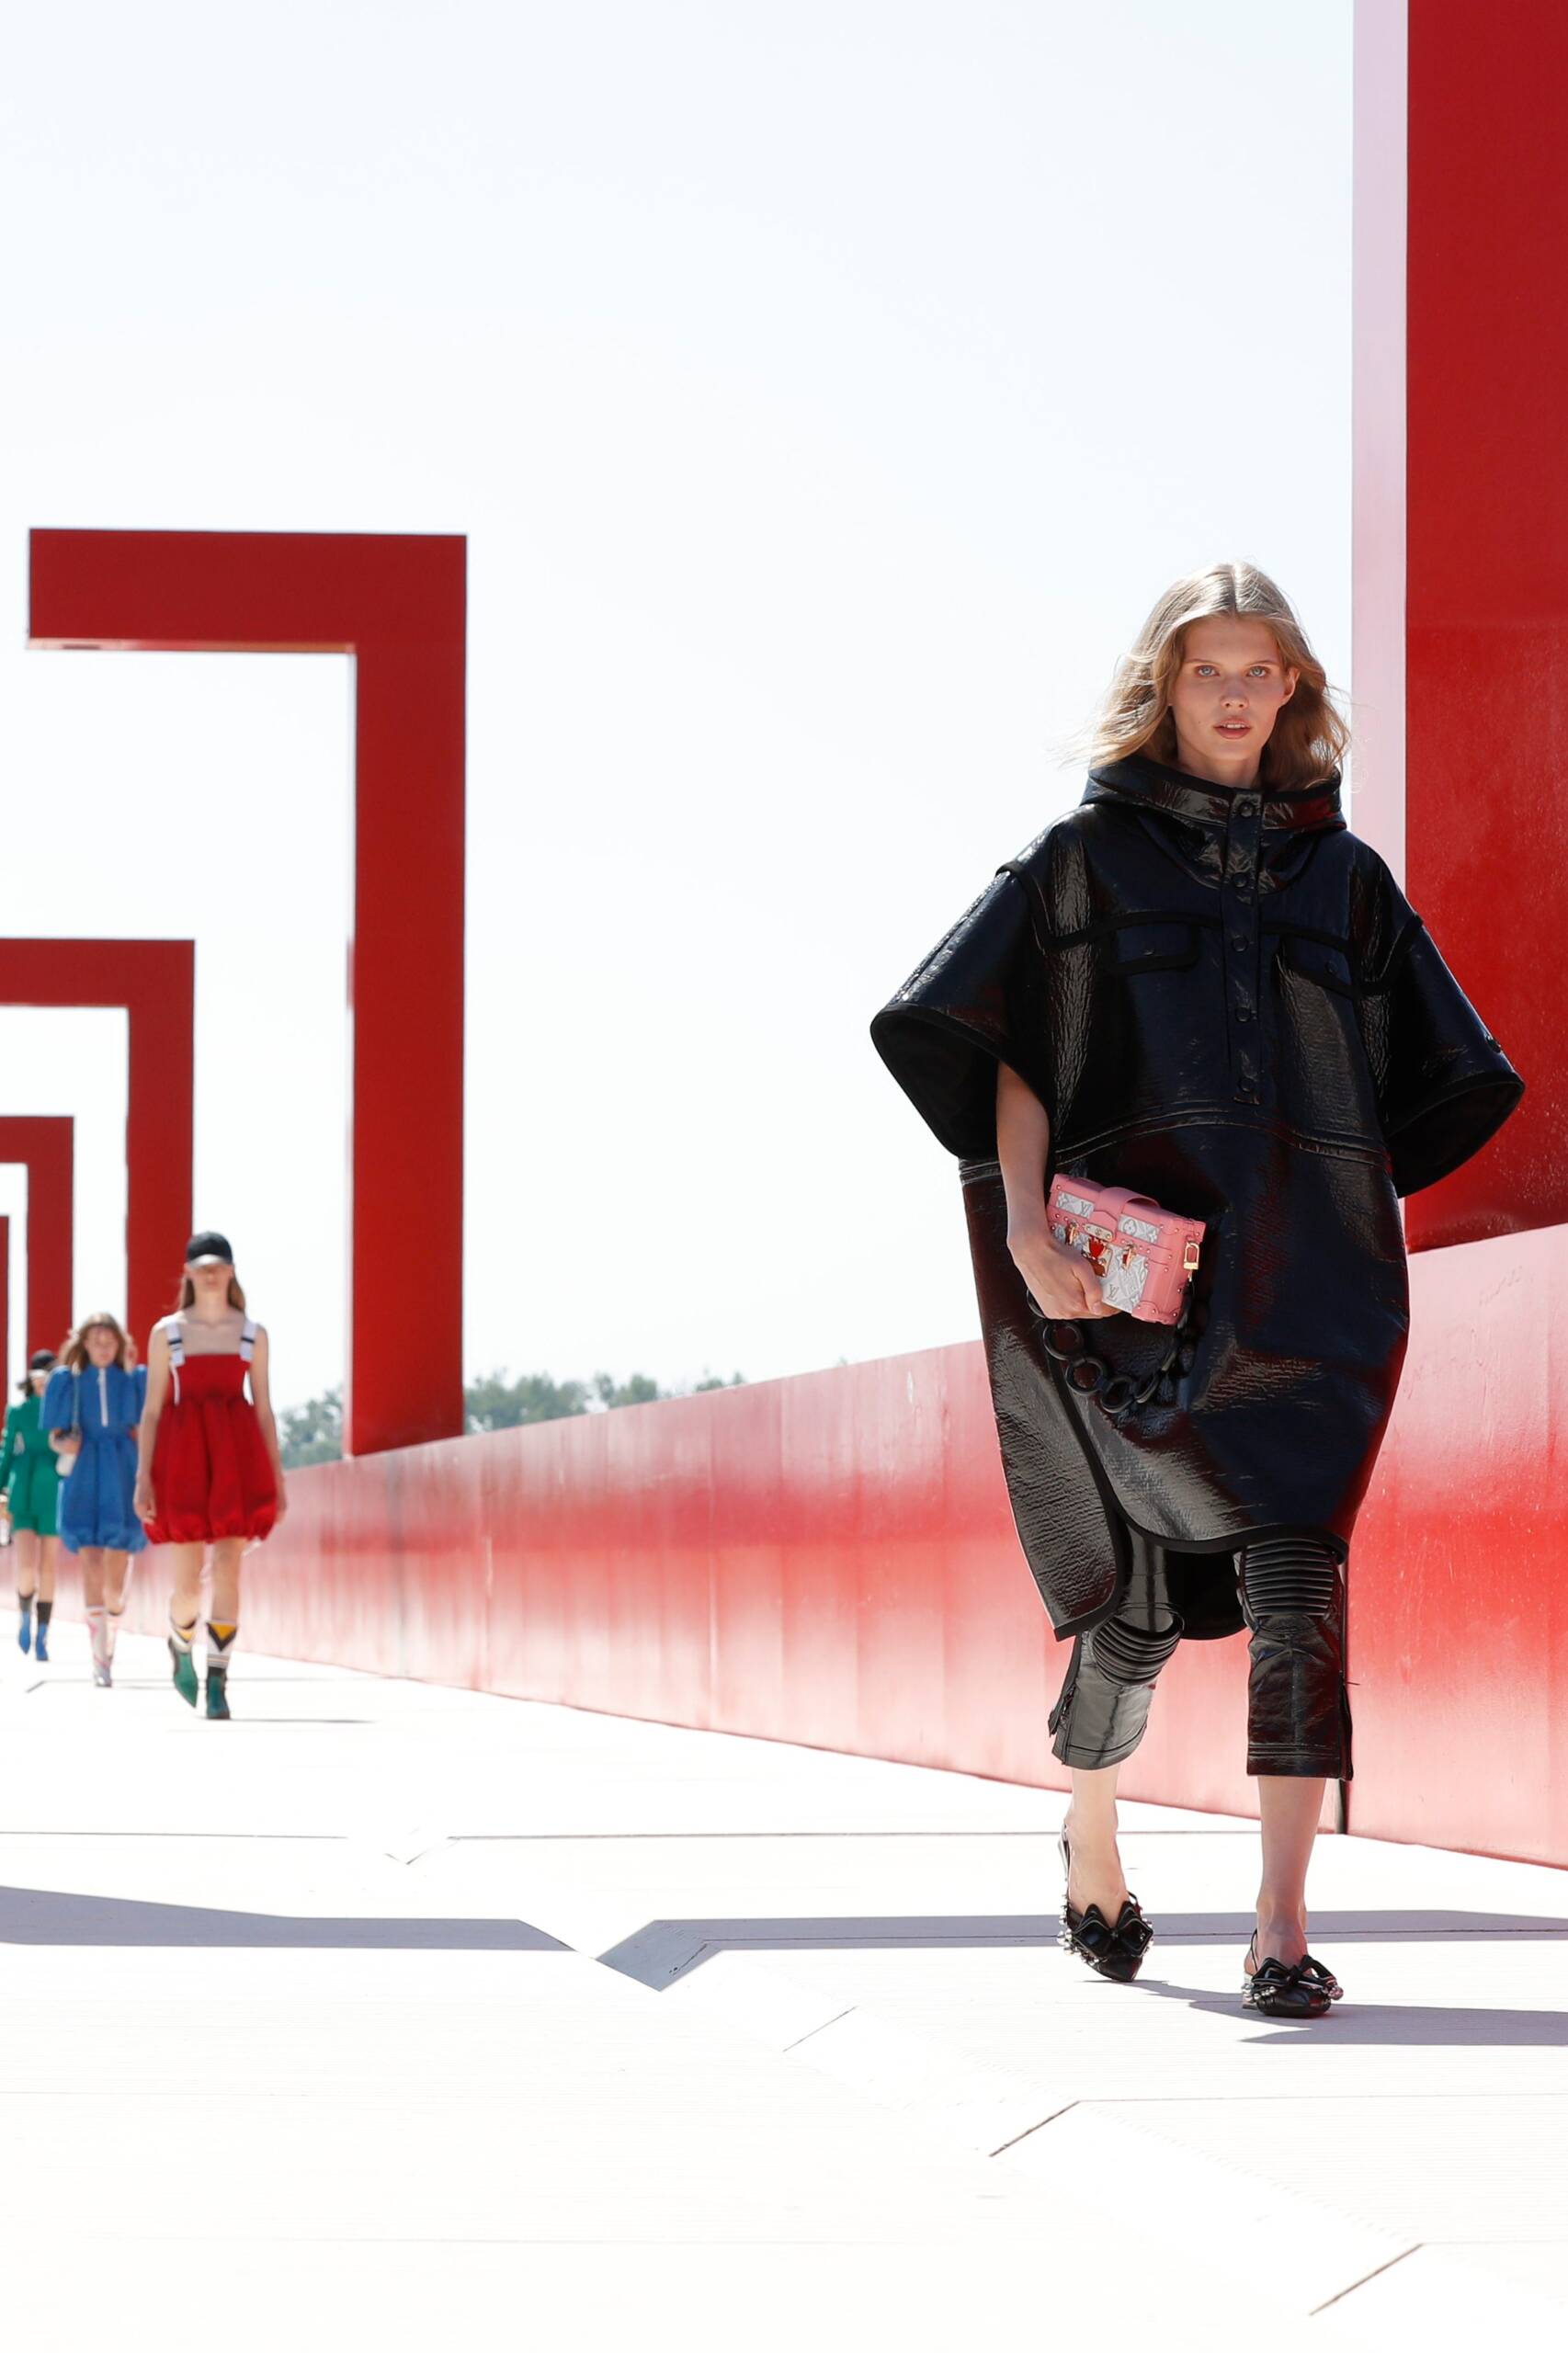 Louis Vuitton s new space